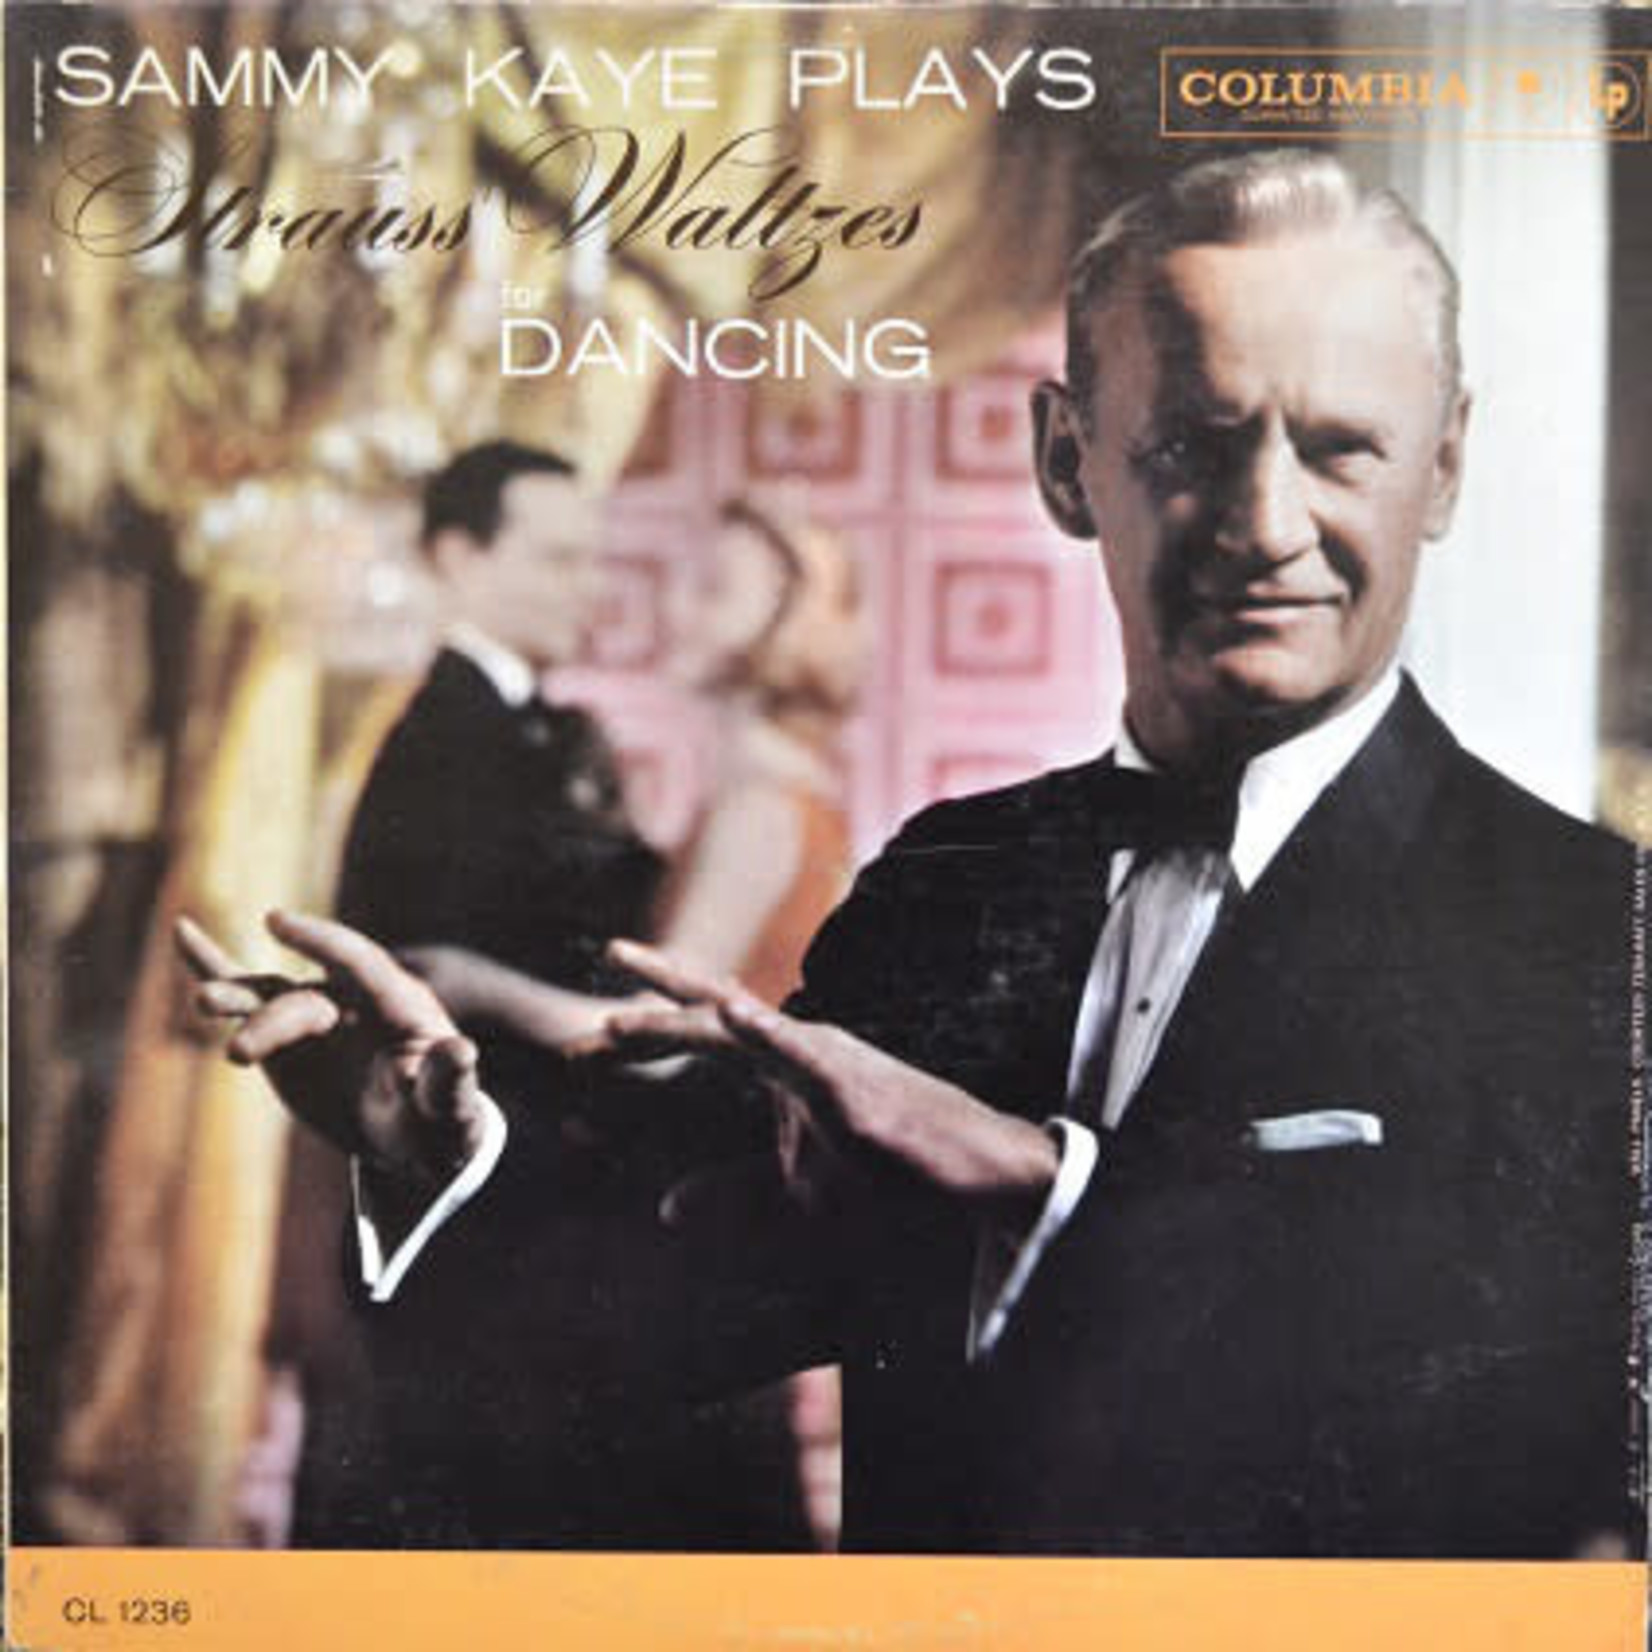 Sammy Kaye – Sammy Kaye Plays Strauss Waltzes For Dancing (G, 1959, LP, Mono, CL 1236, Canada)